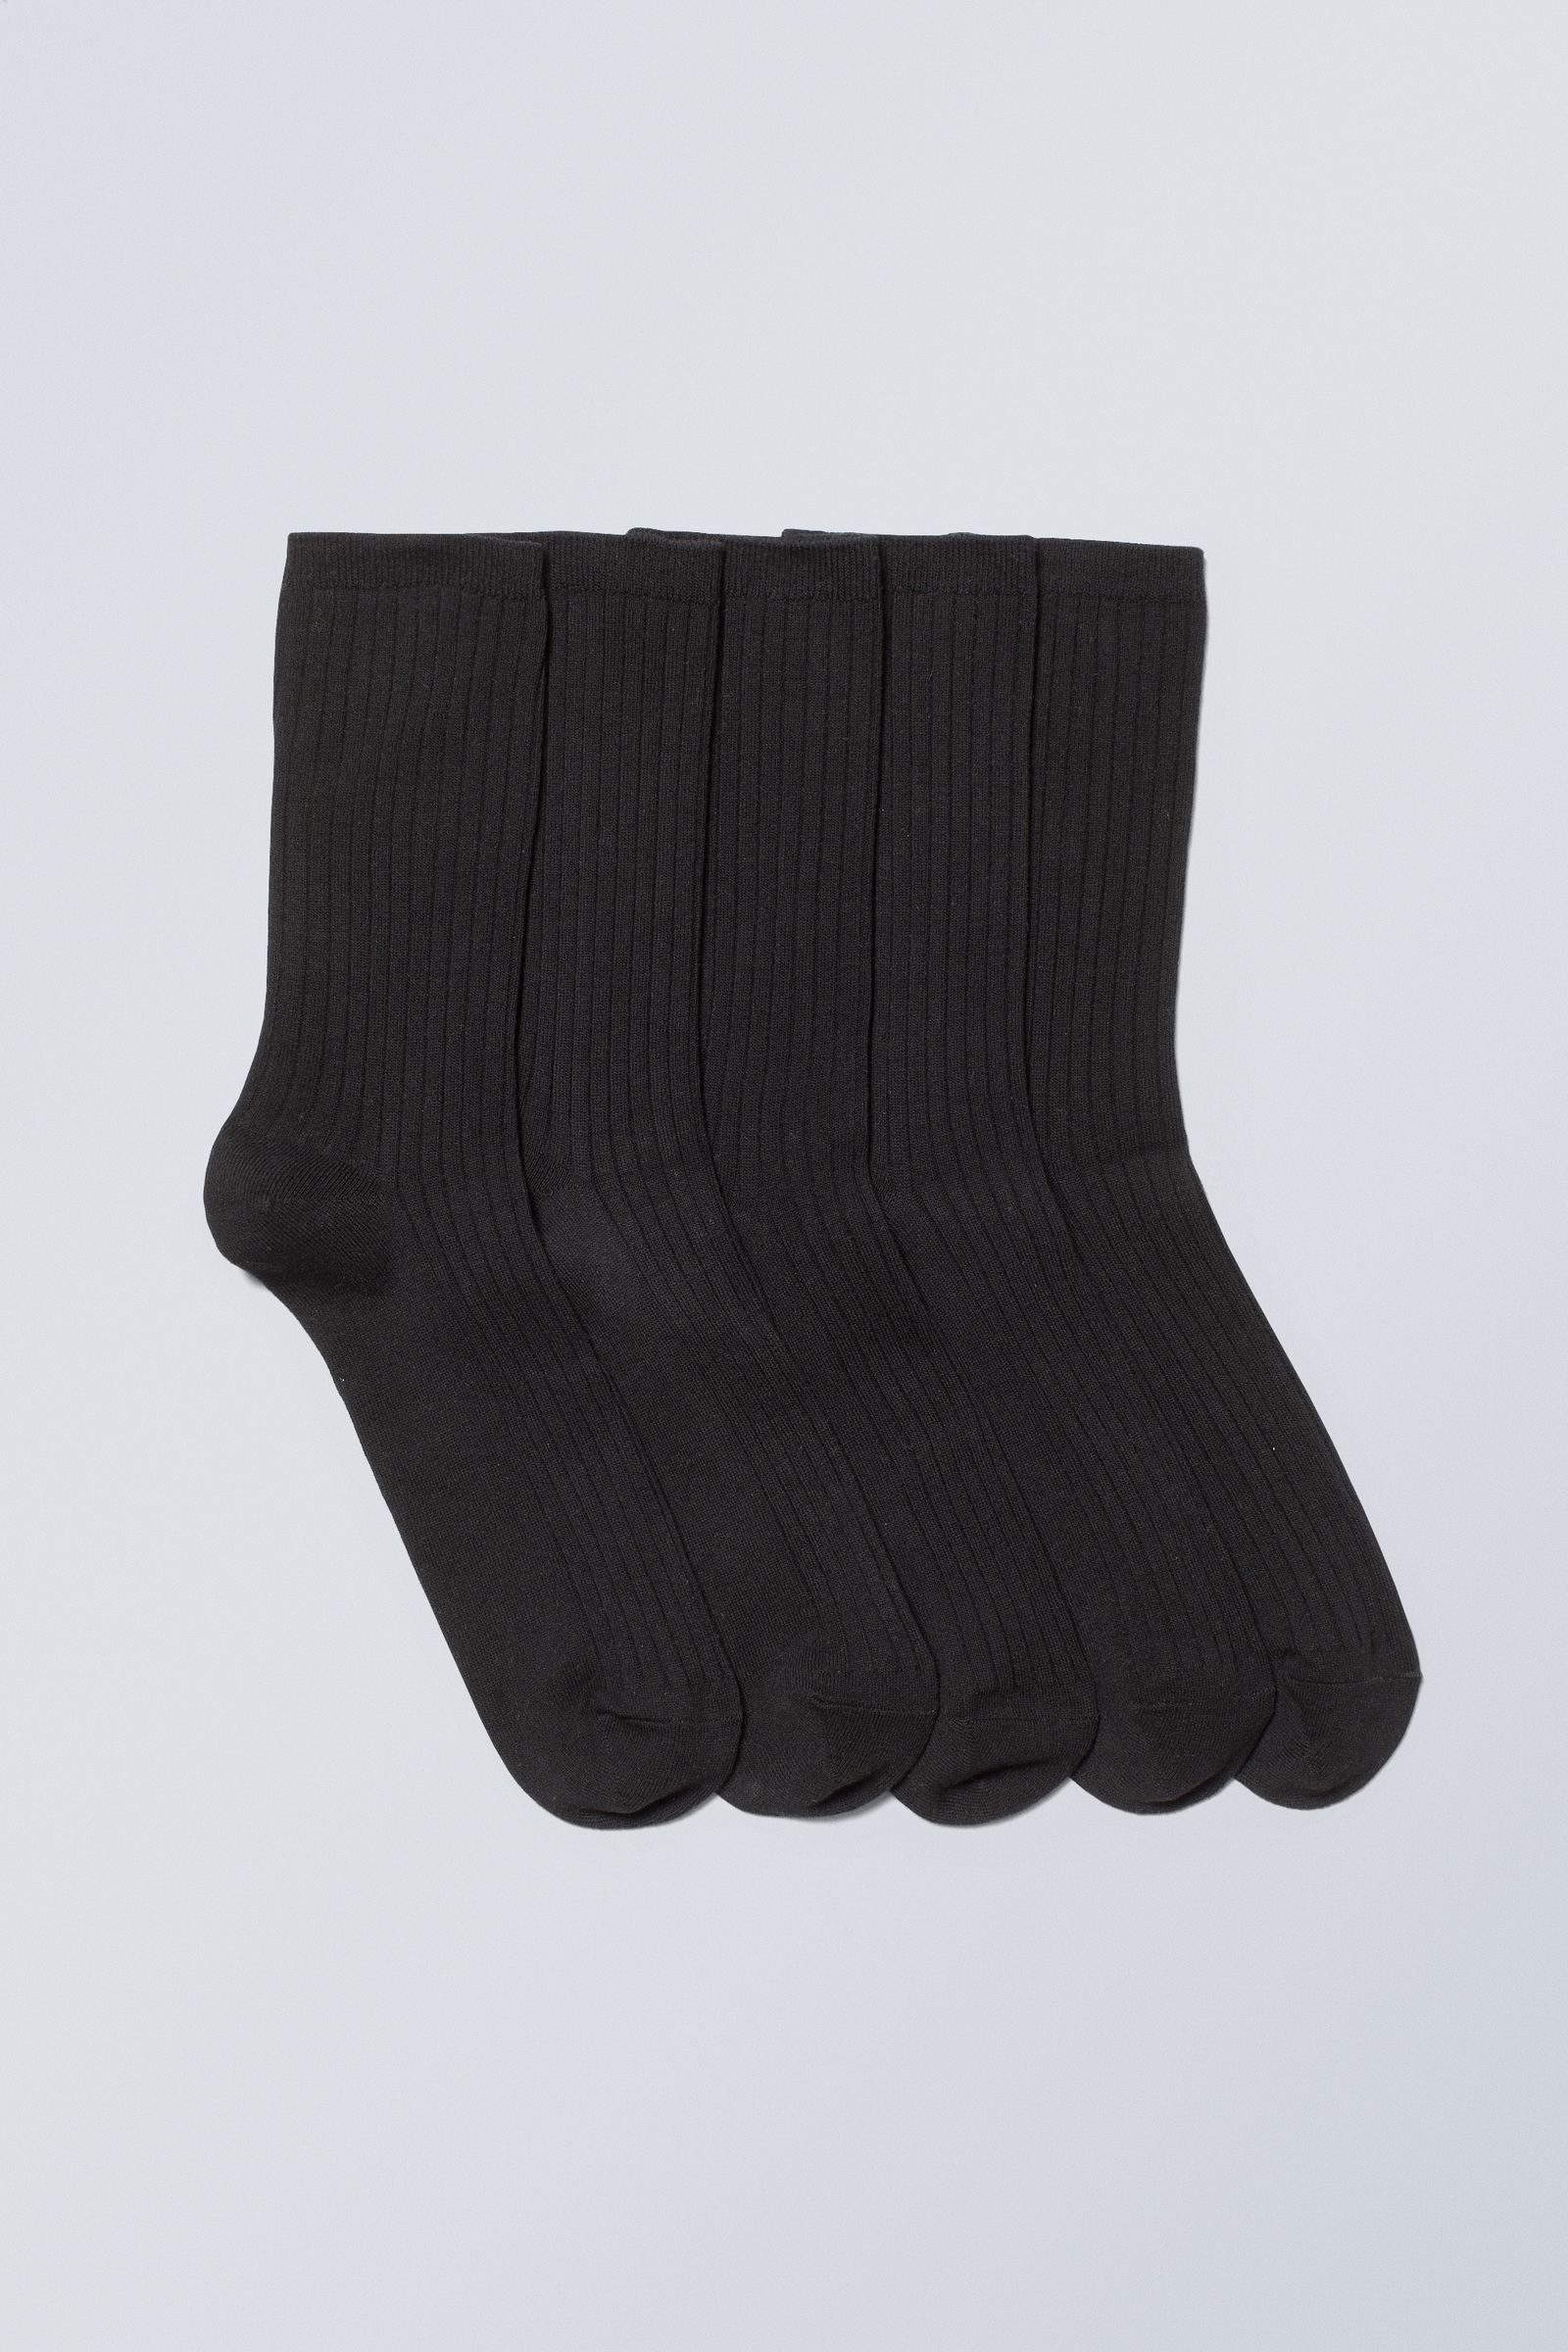 #272628 - 5-pack Rib Socks